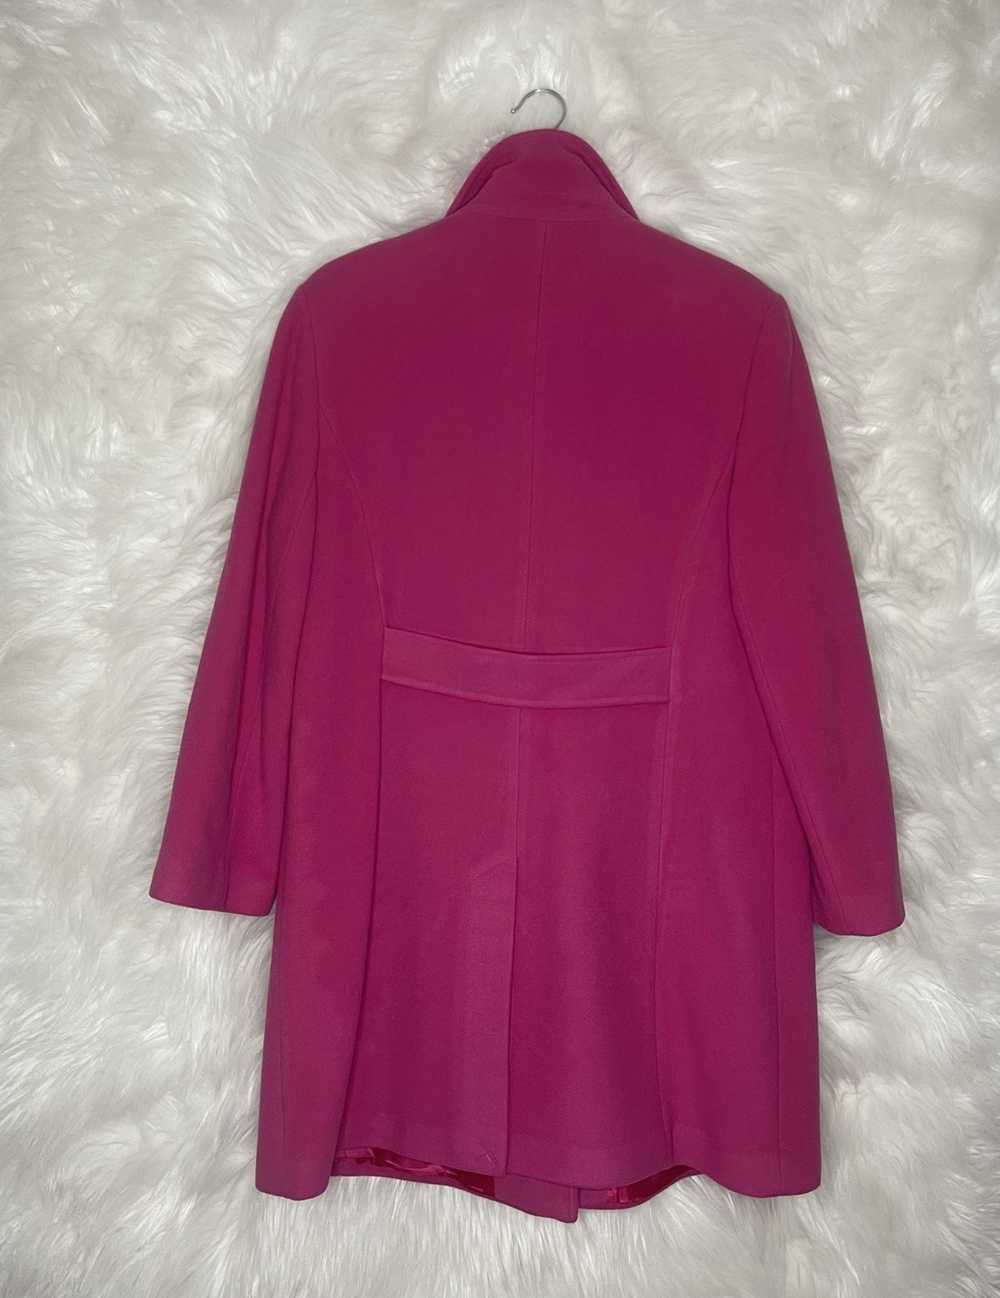 Vintage Pink Overcoat - image 2